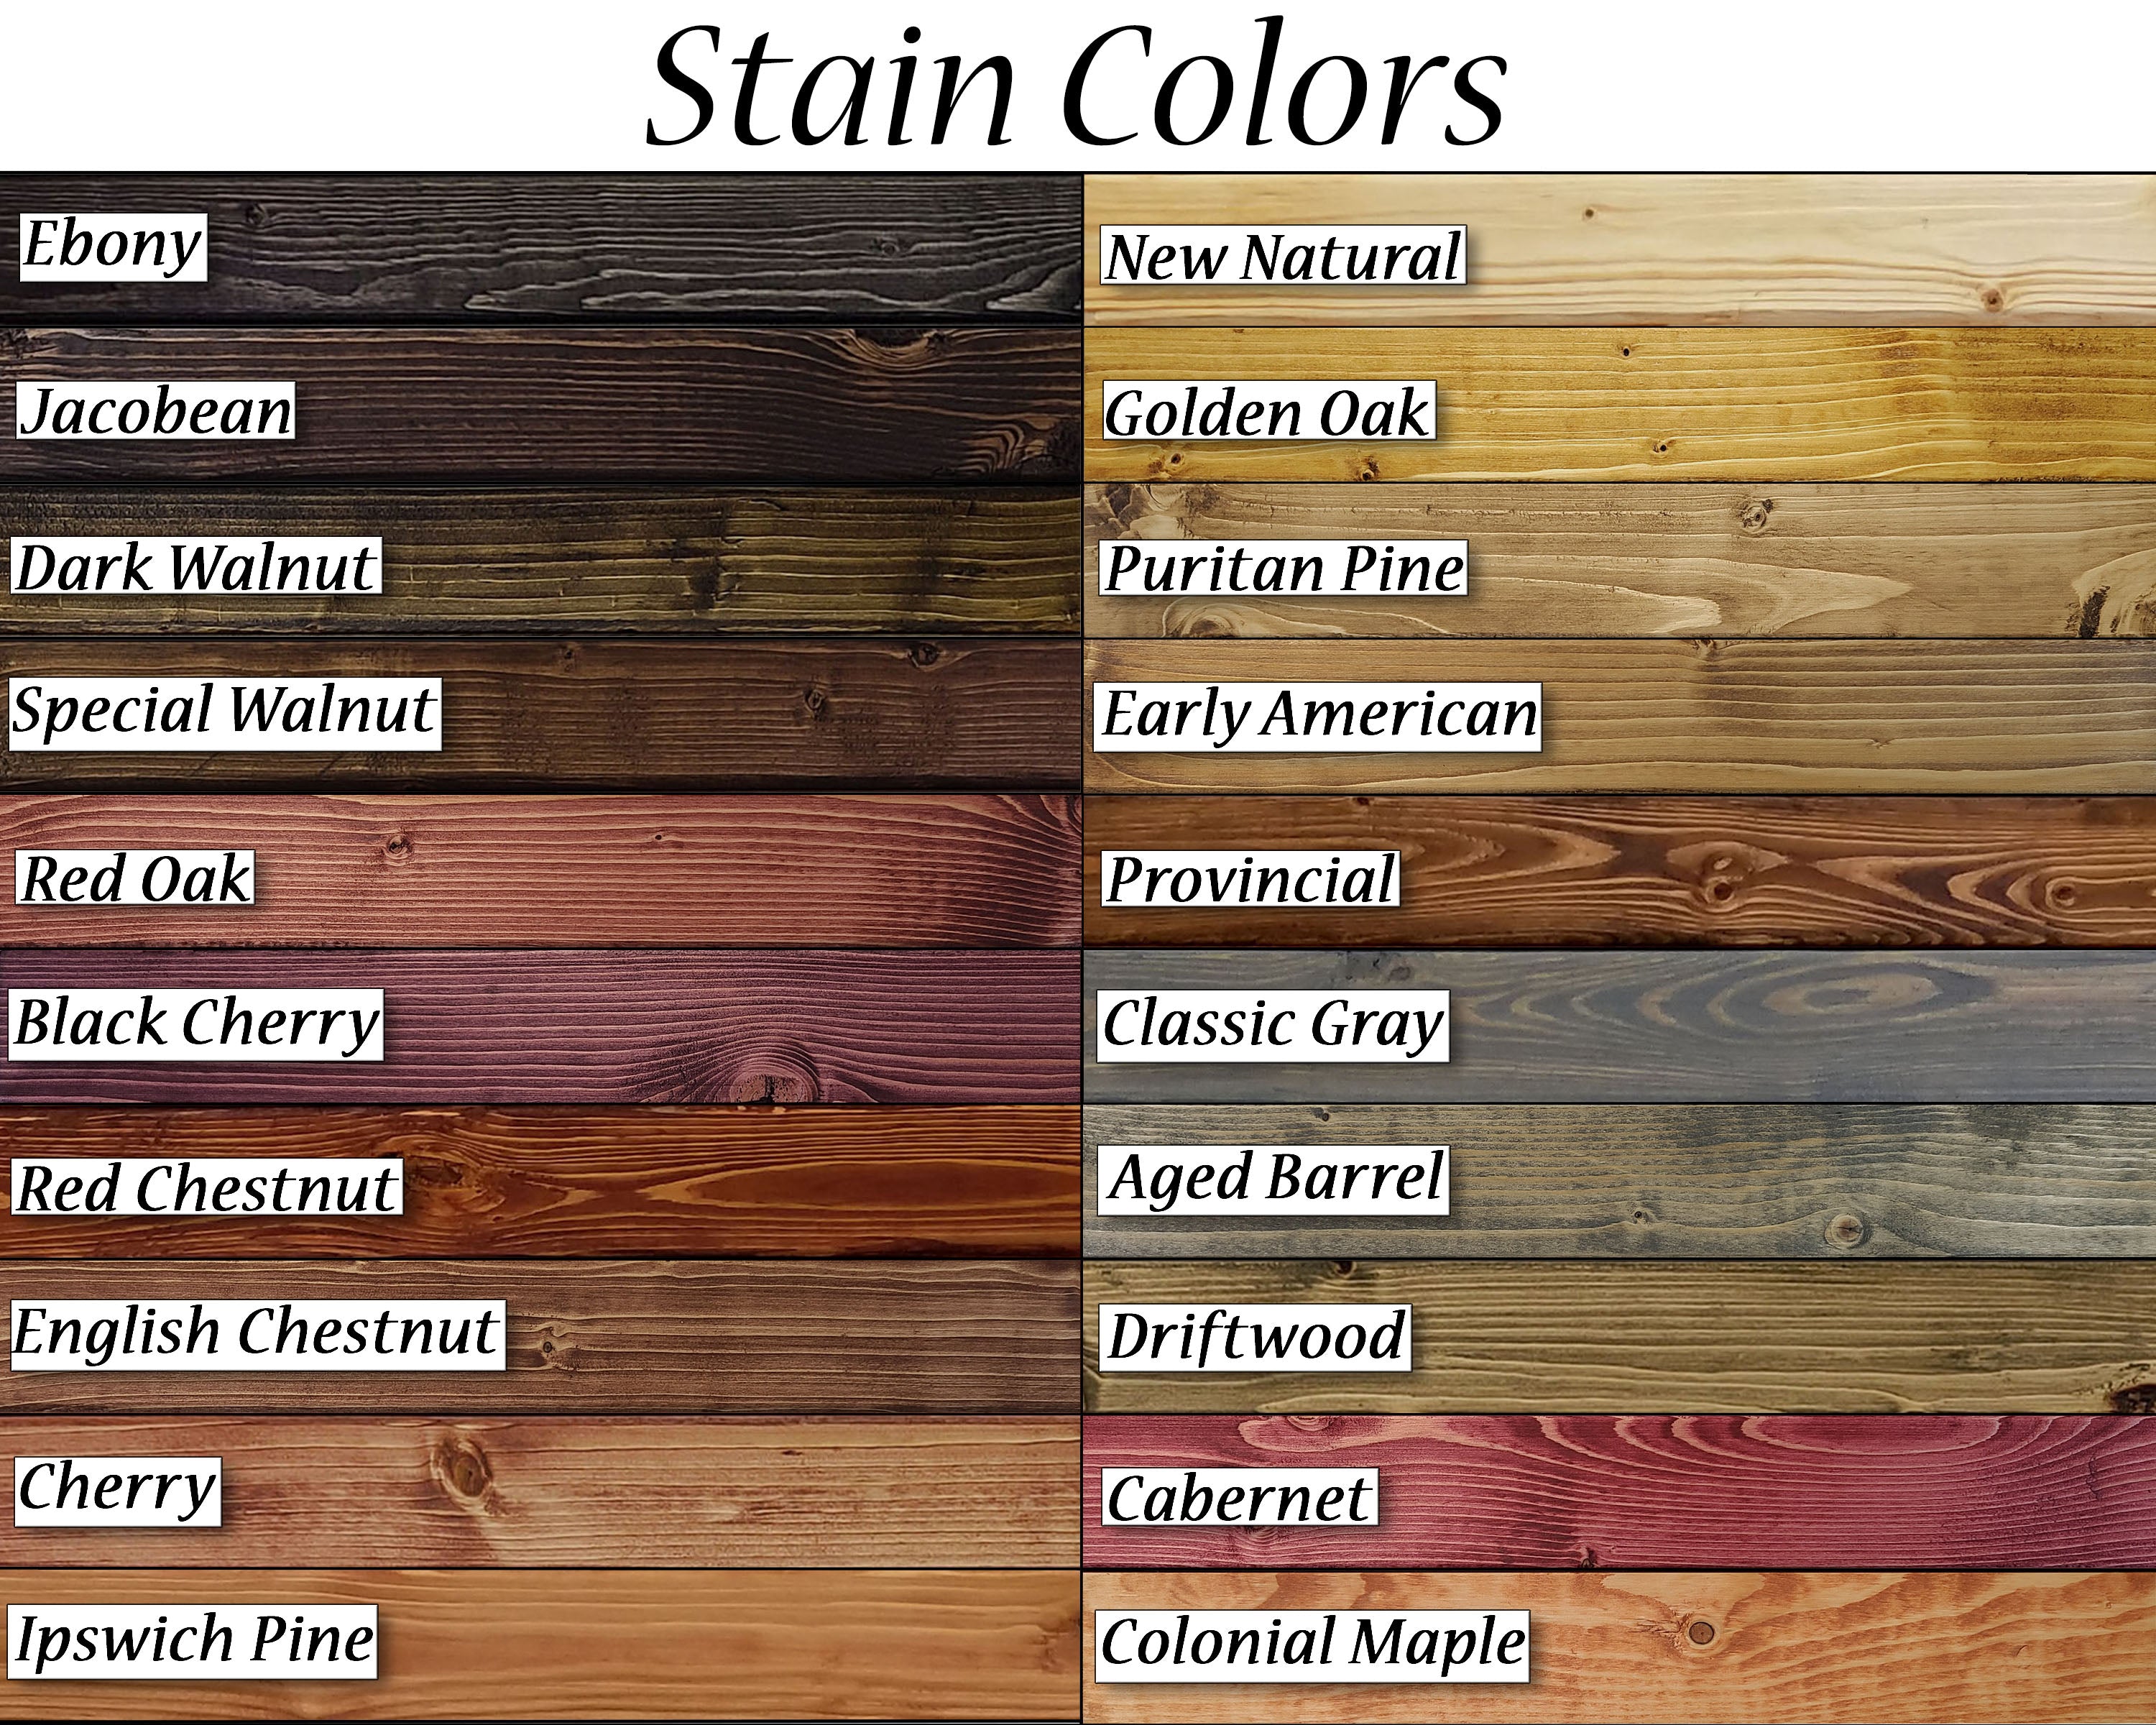 Custom Staun Colors